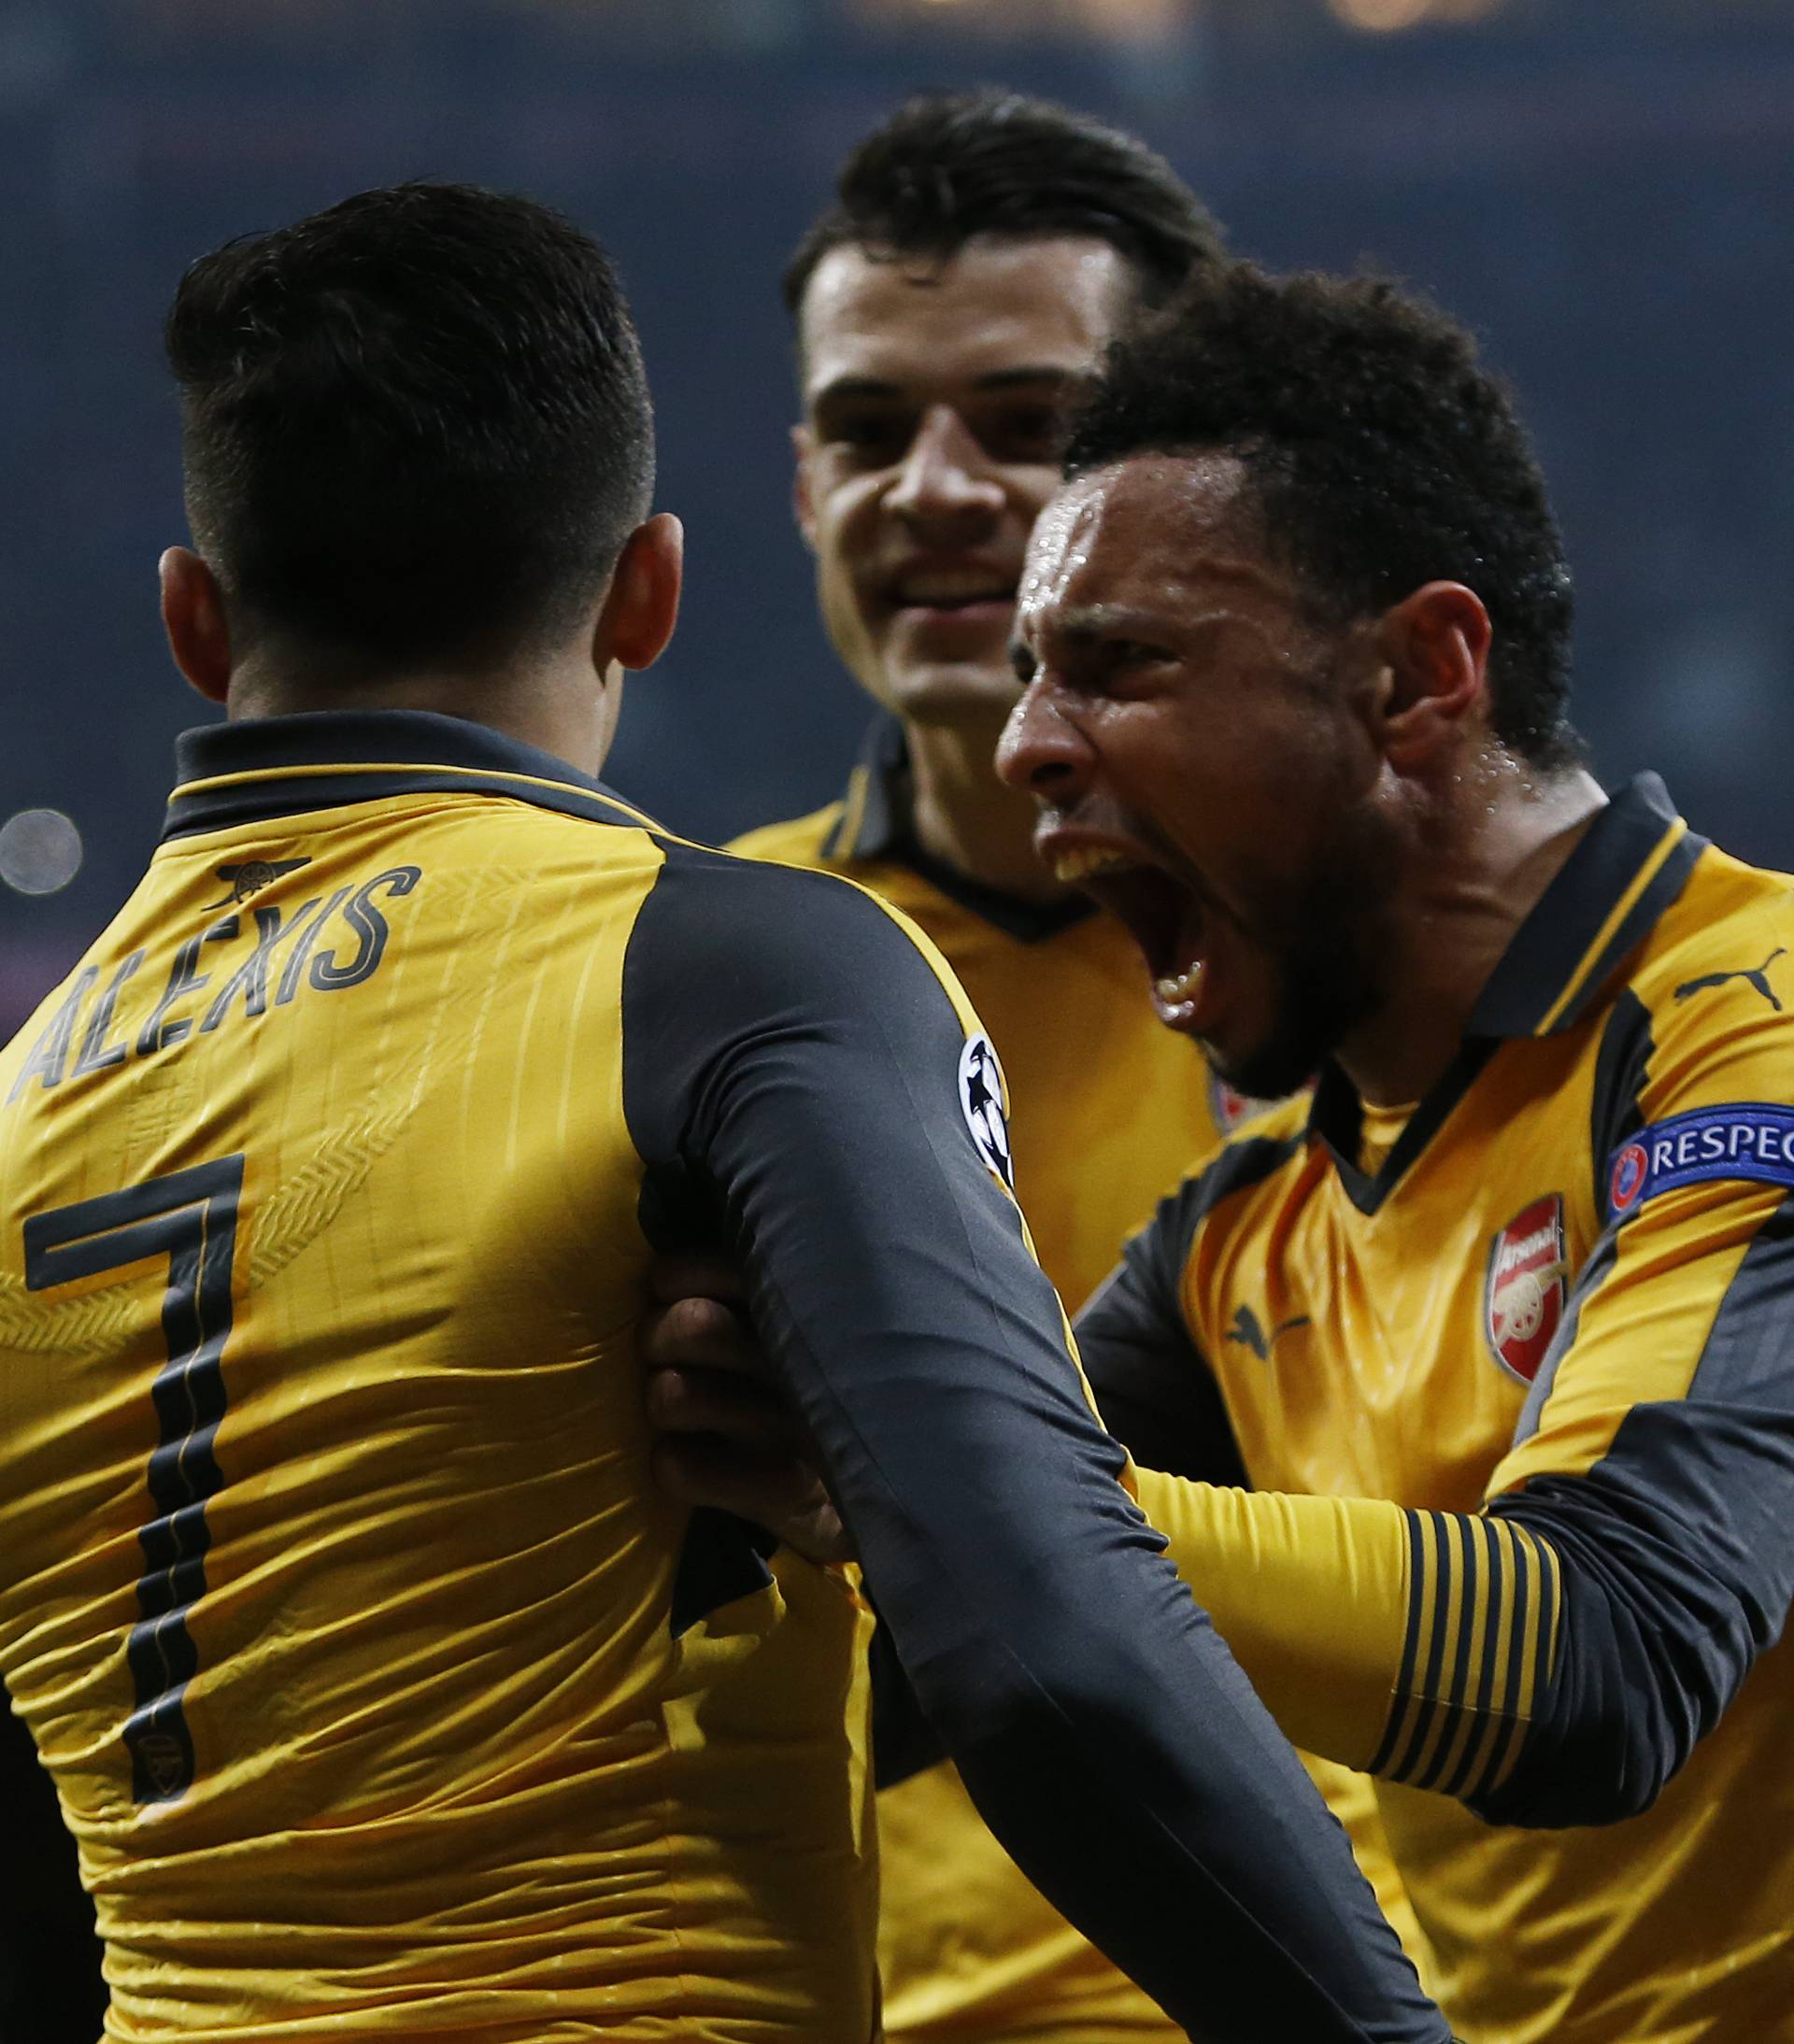 Arsenal's Alexis Sanchez celebrates scoring their first goal with Francis Coquelin and Granit Xhaka